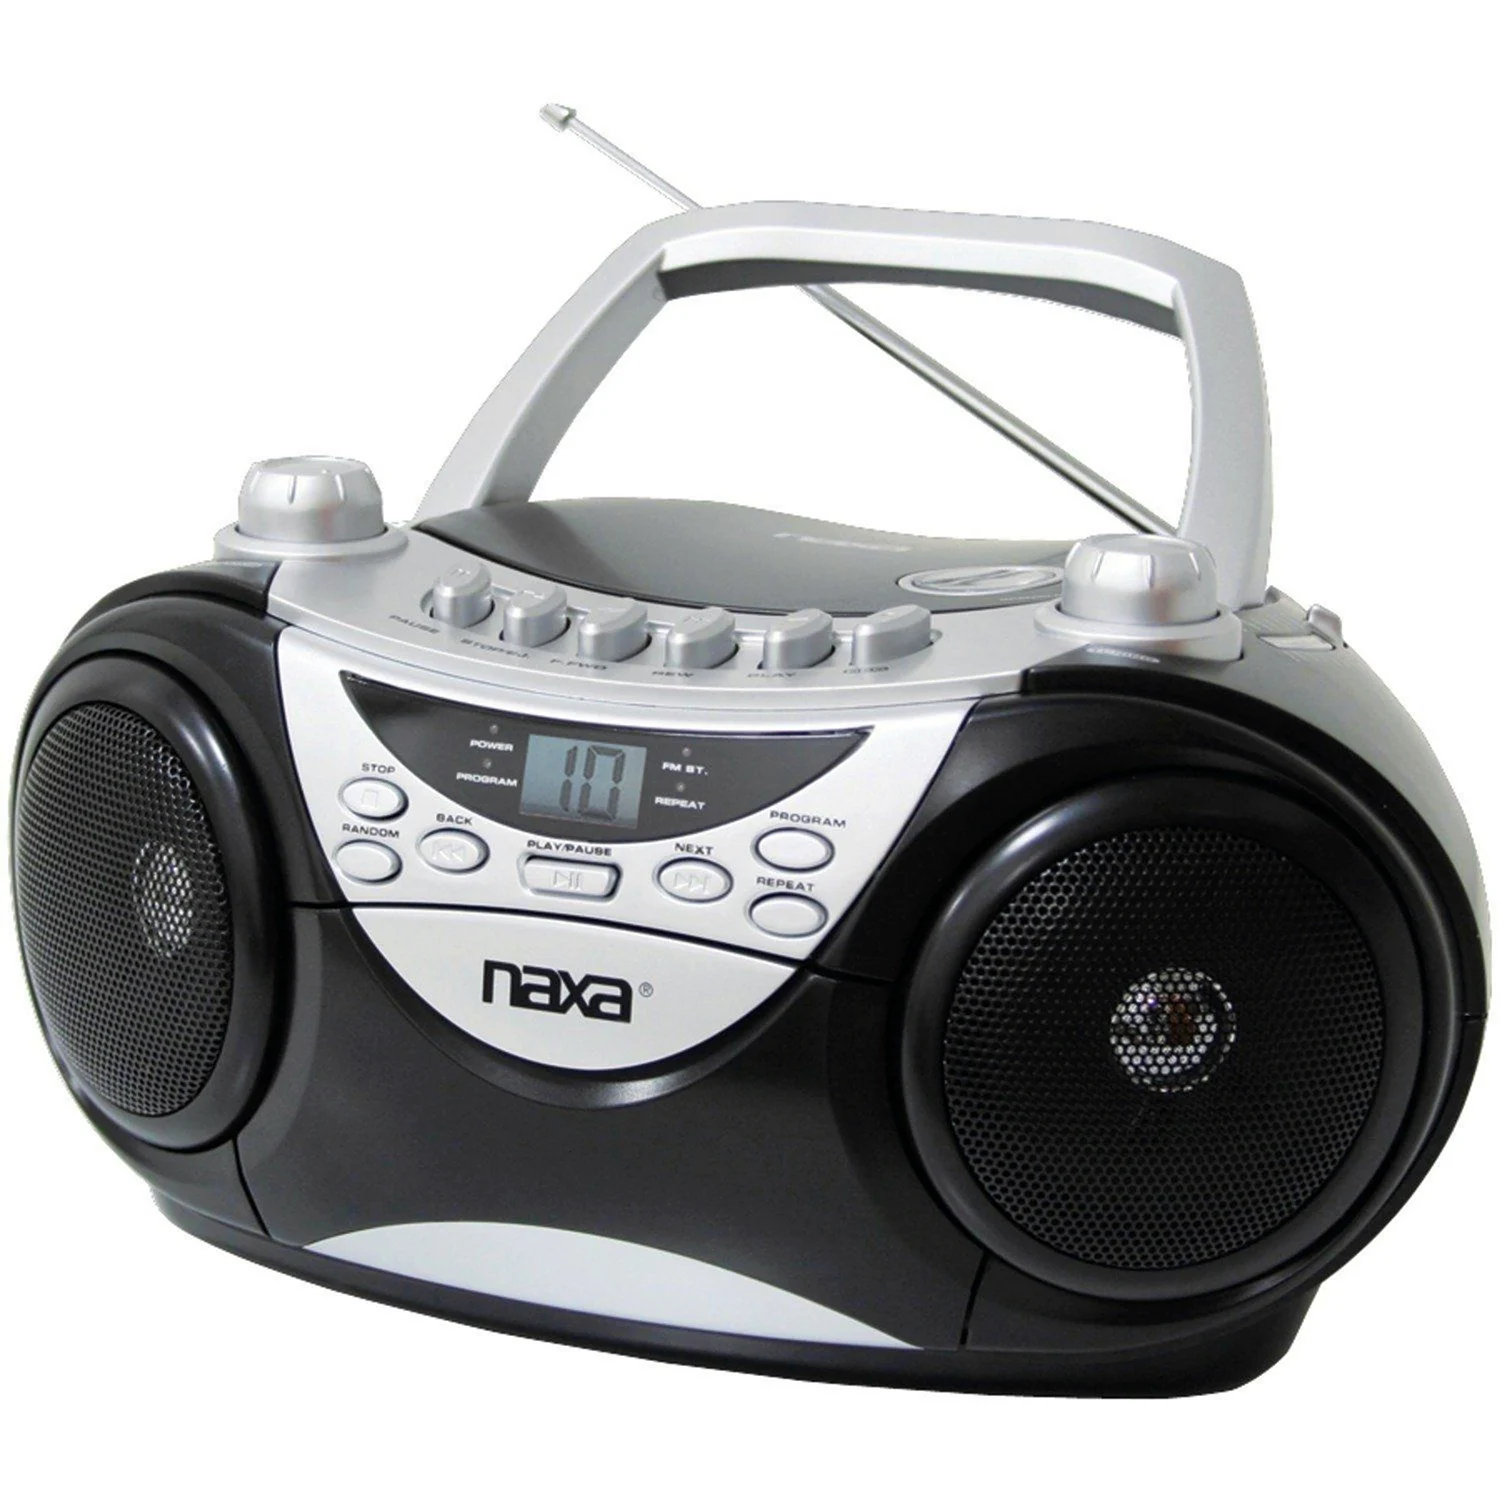 Portable Radio Cassette Player модель 9202